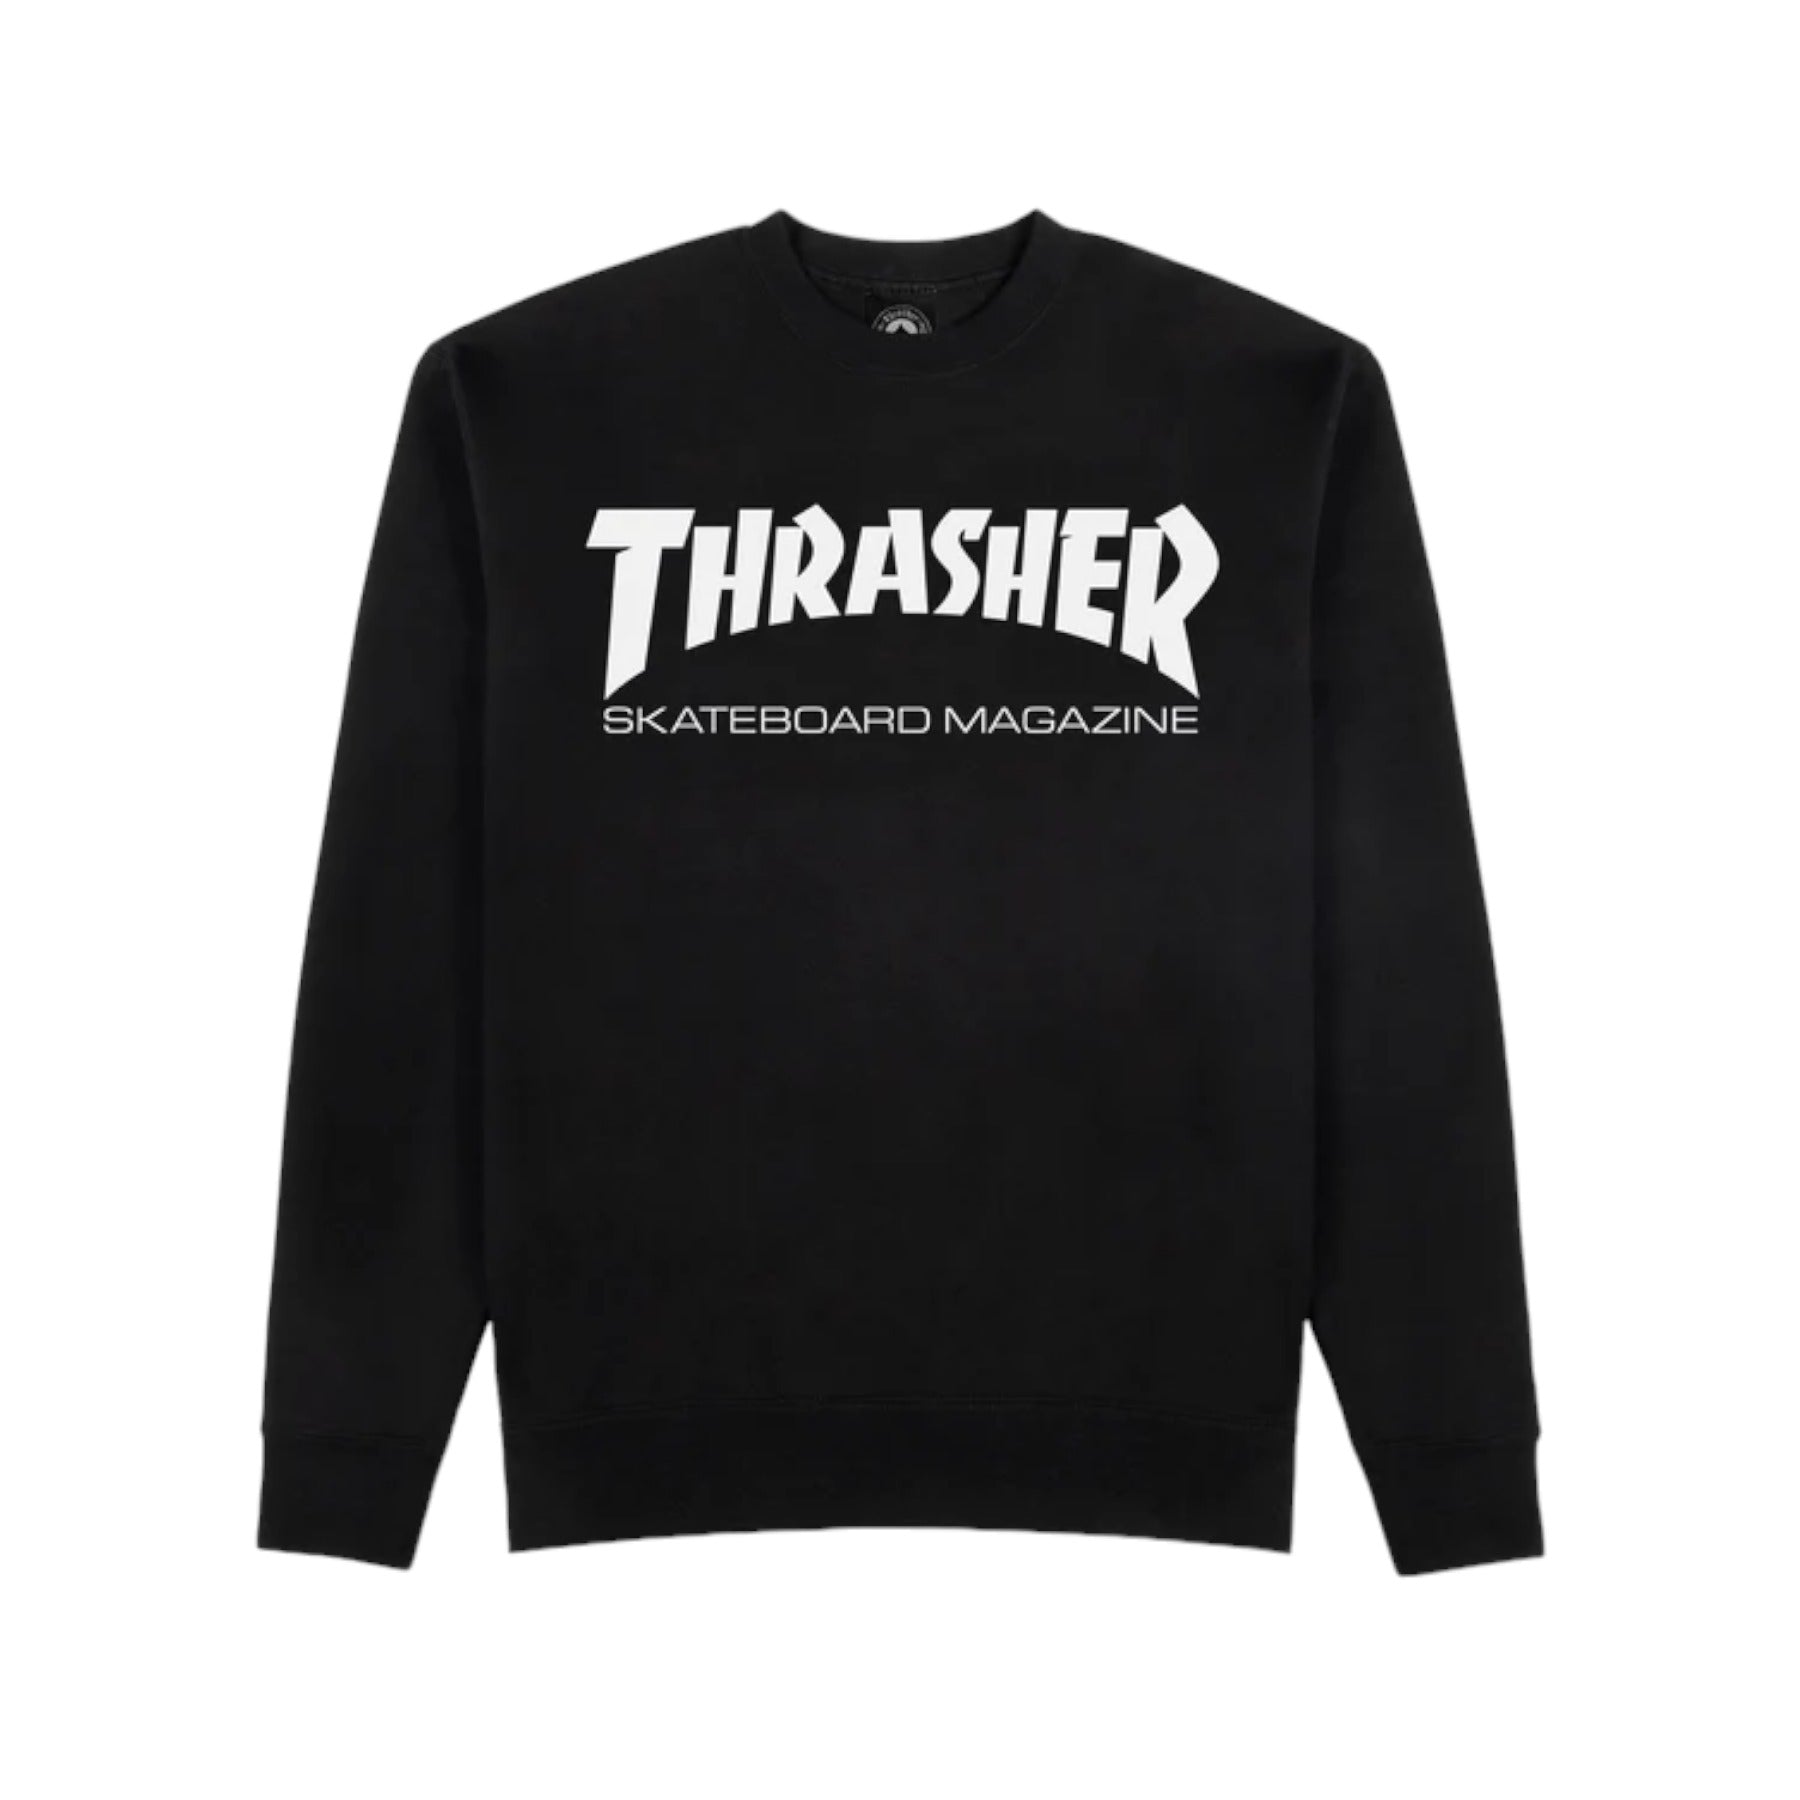 Thrasher Skate Mag Crewneck - Black